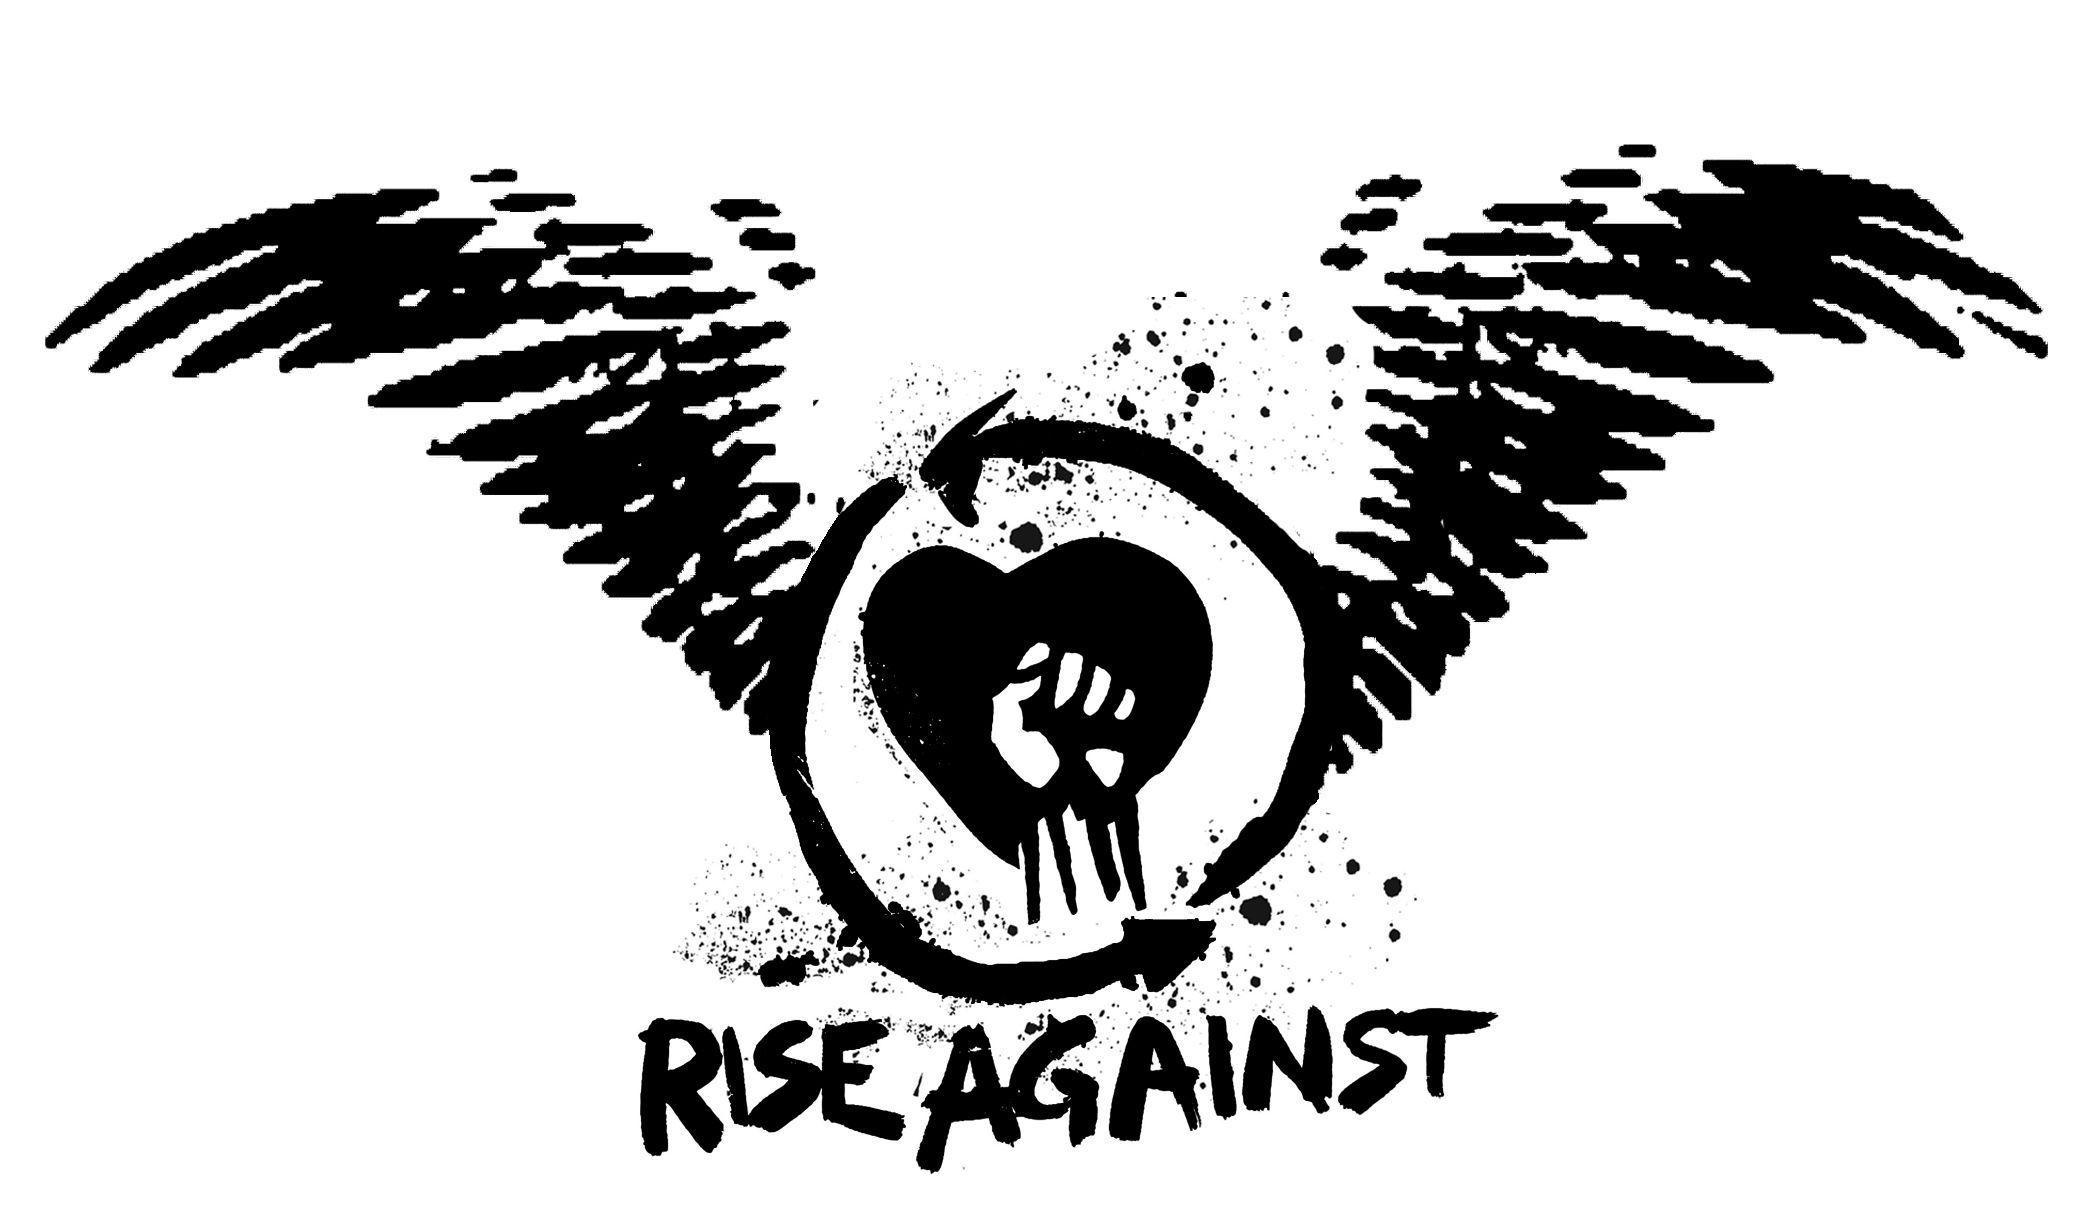 The Birds Band Logo - Rise Against band image. Bands